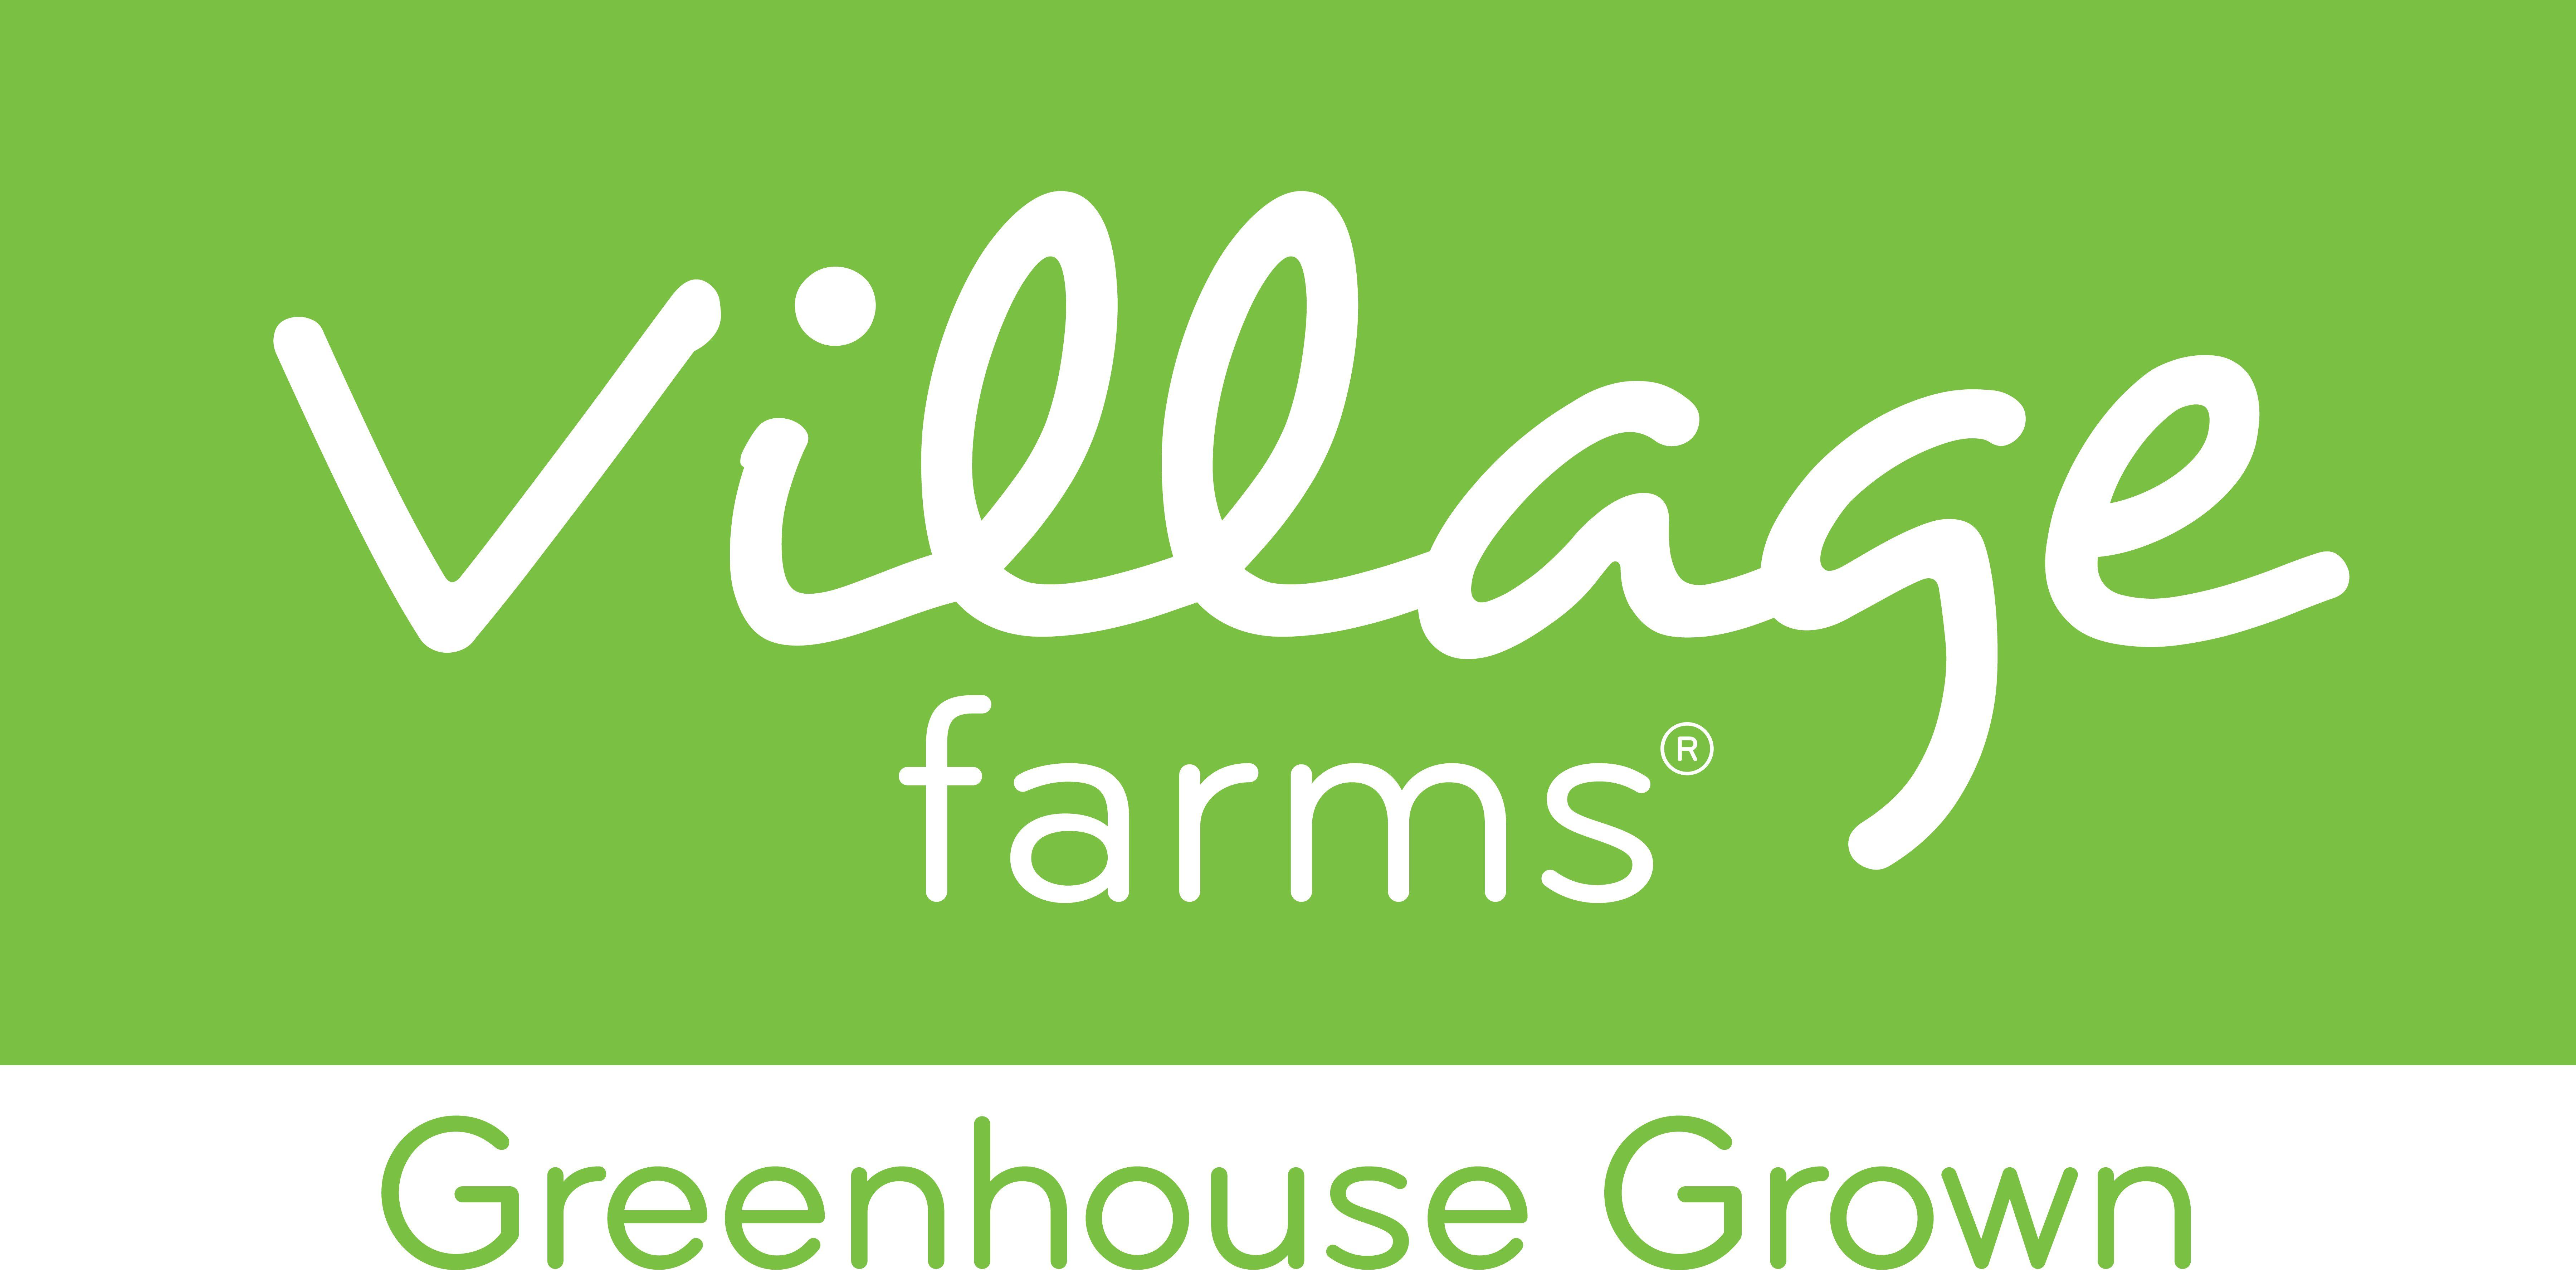 New SolarCity Logo - Village Farms, Solar City, MP2 Announce Monahans Solar Project